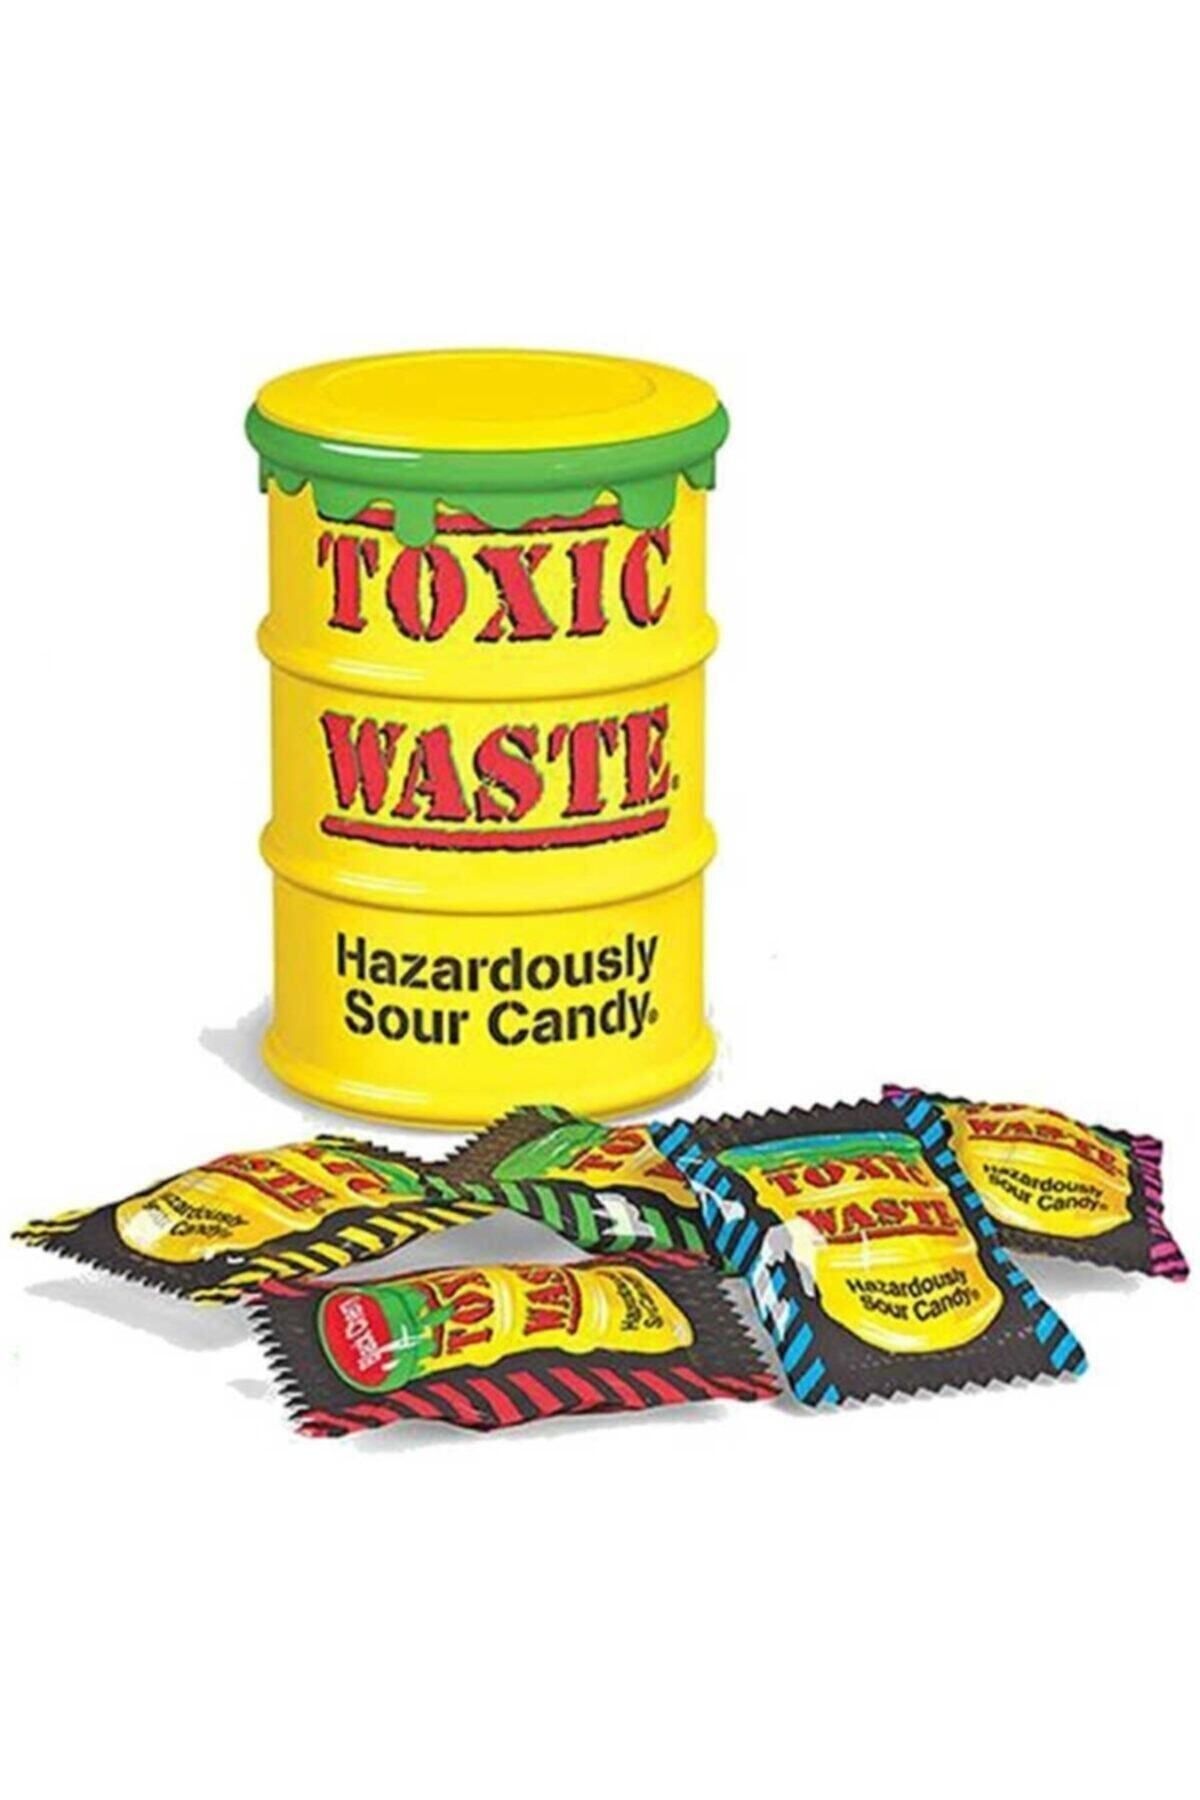 Токсик часы. Toxic waste конфеты. Кислые конфеты Токсик. Кислые конфеты Toxic waste. Токсик Вейст самые кислые конфеты.